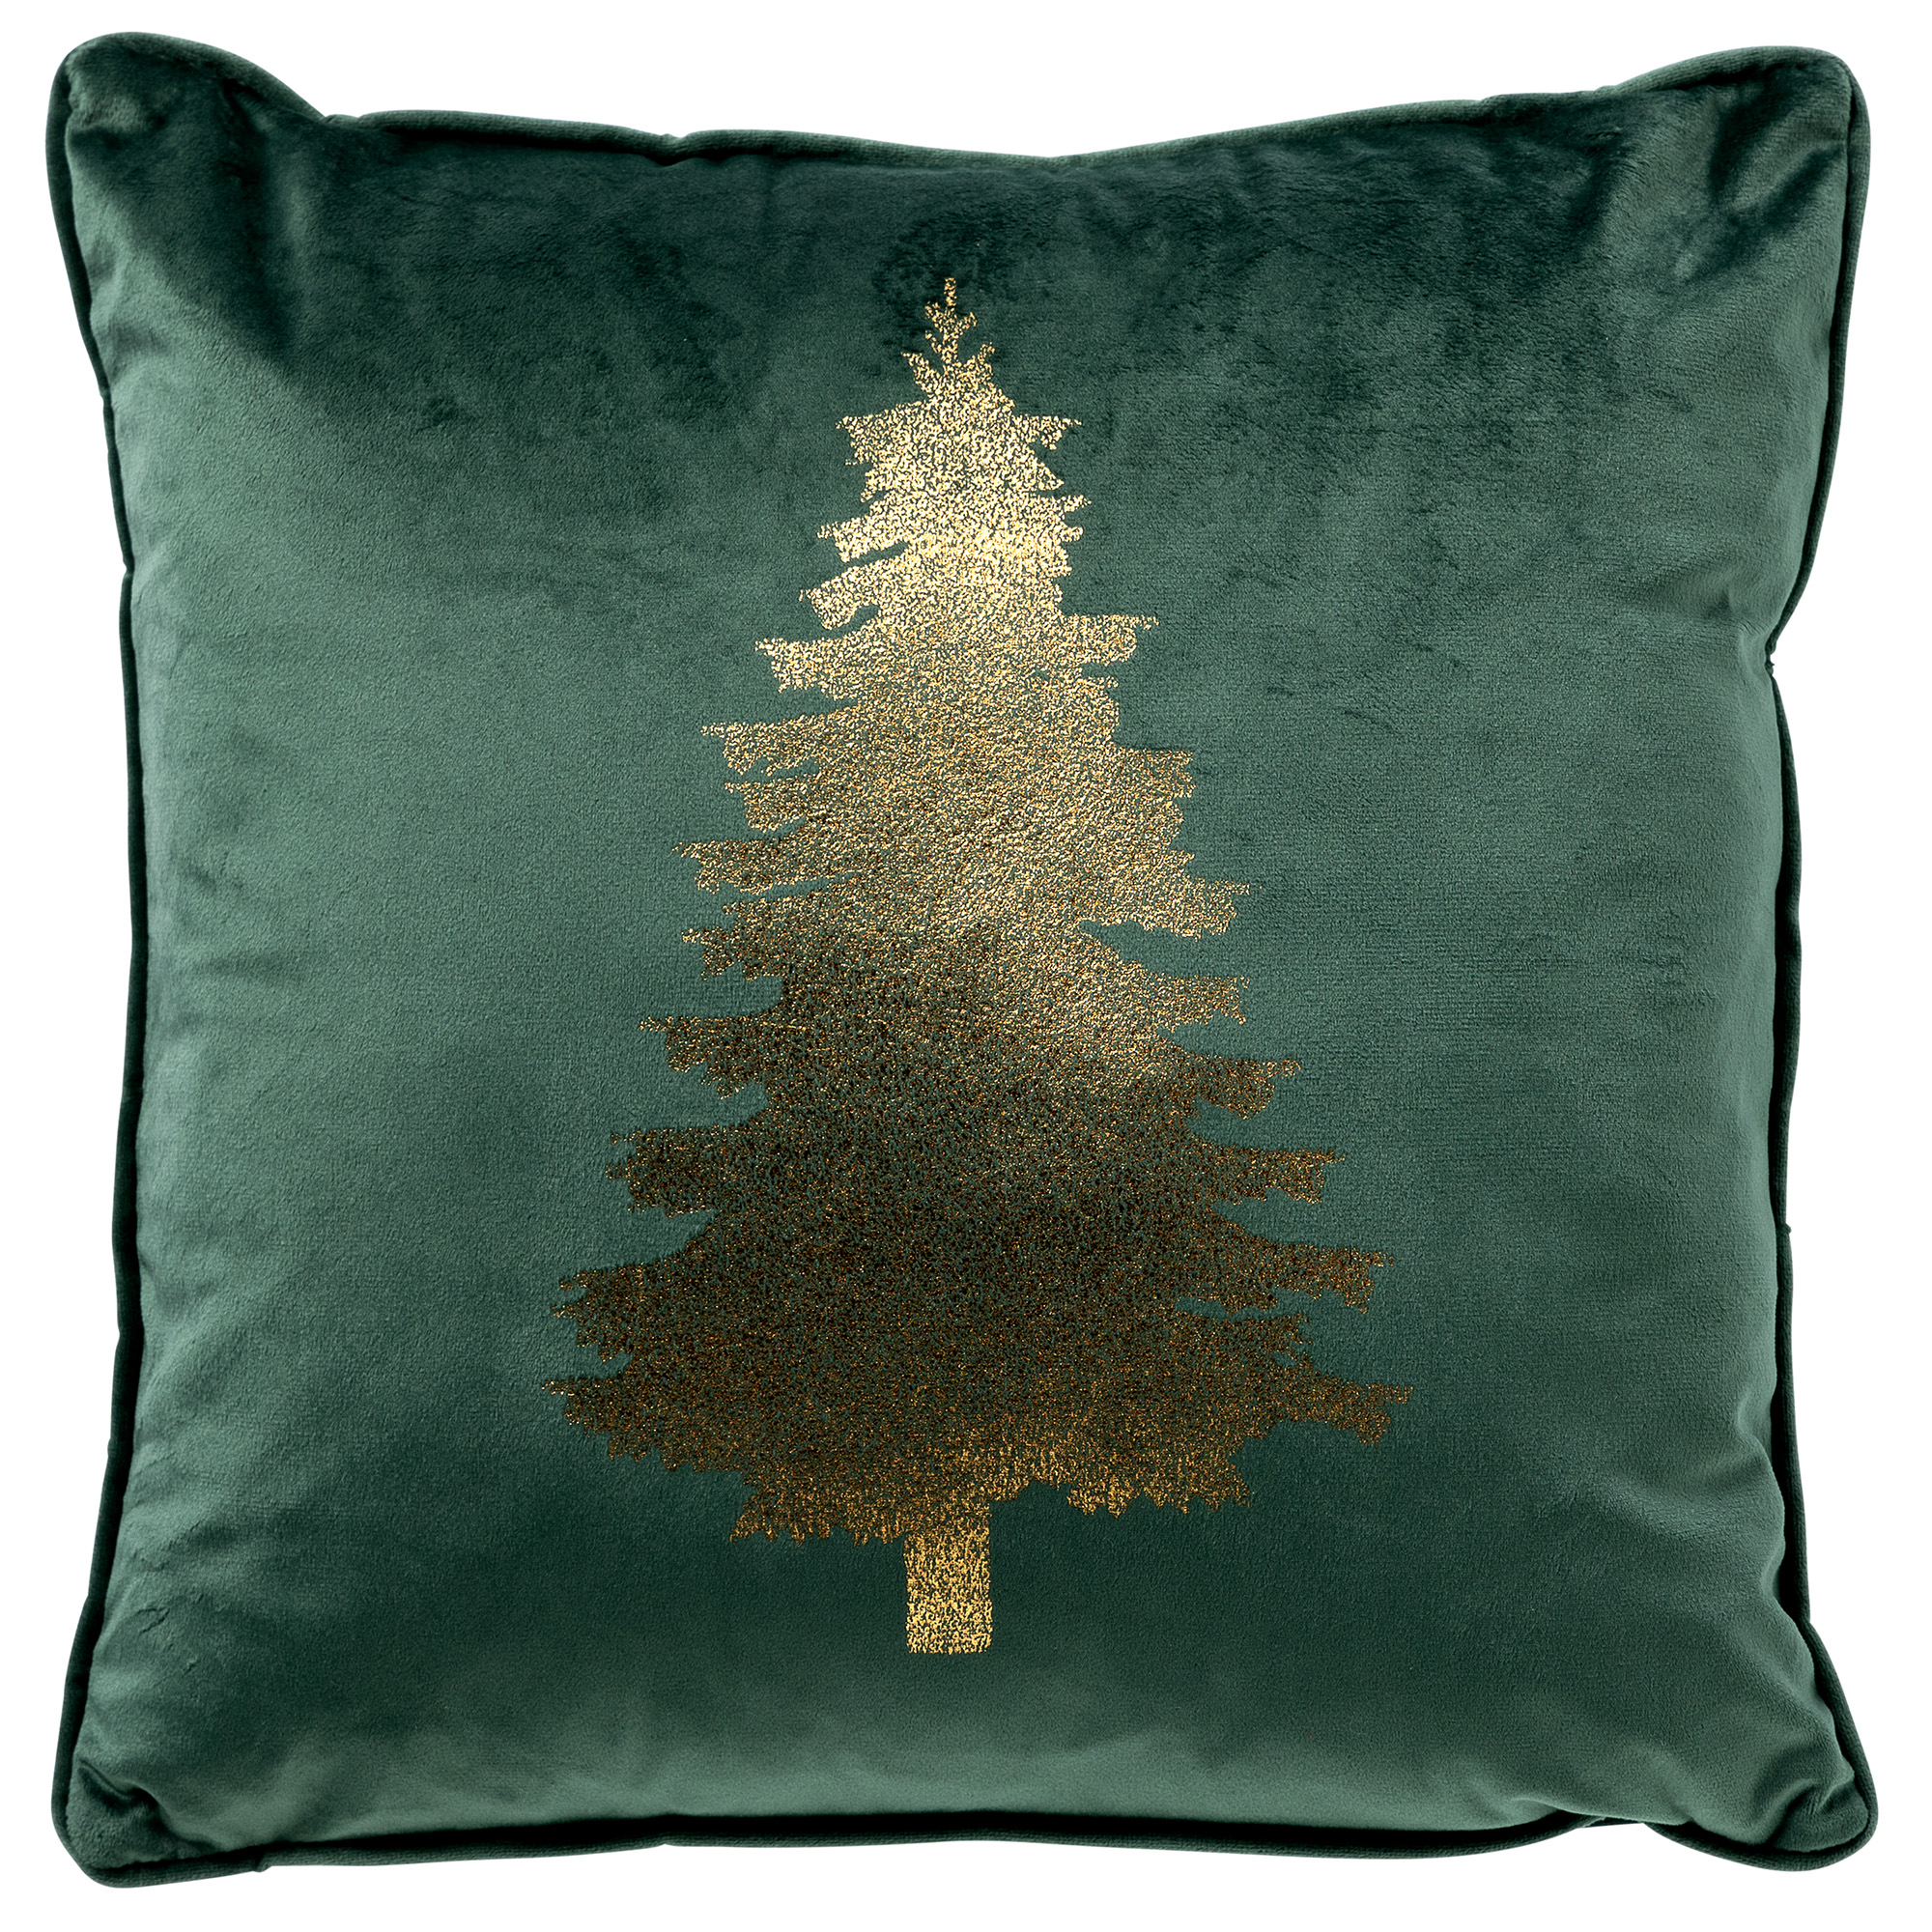 TREE - Cushion cover 45x45 cm - Green - Christmas decoration - velvet